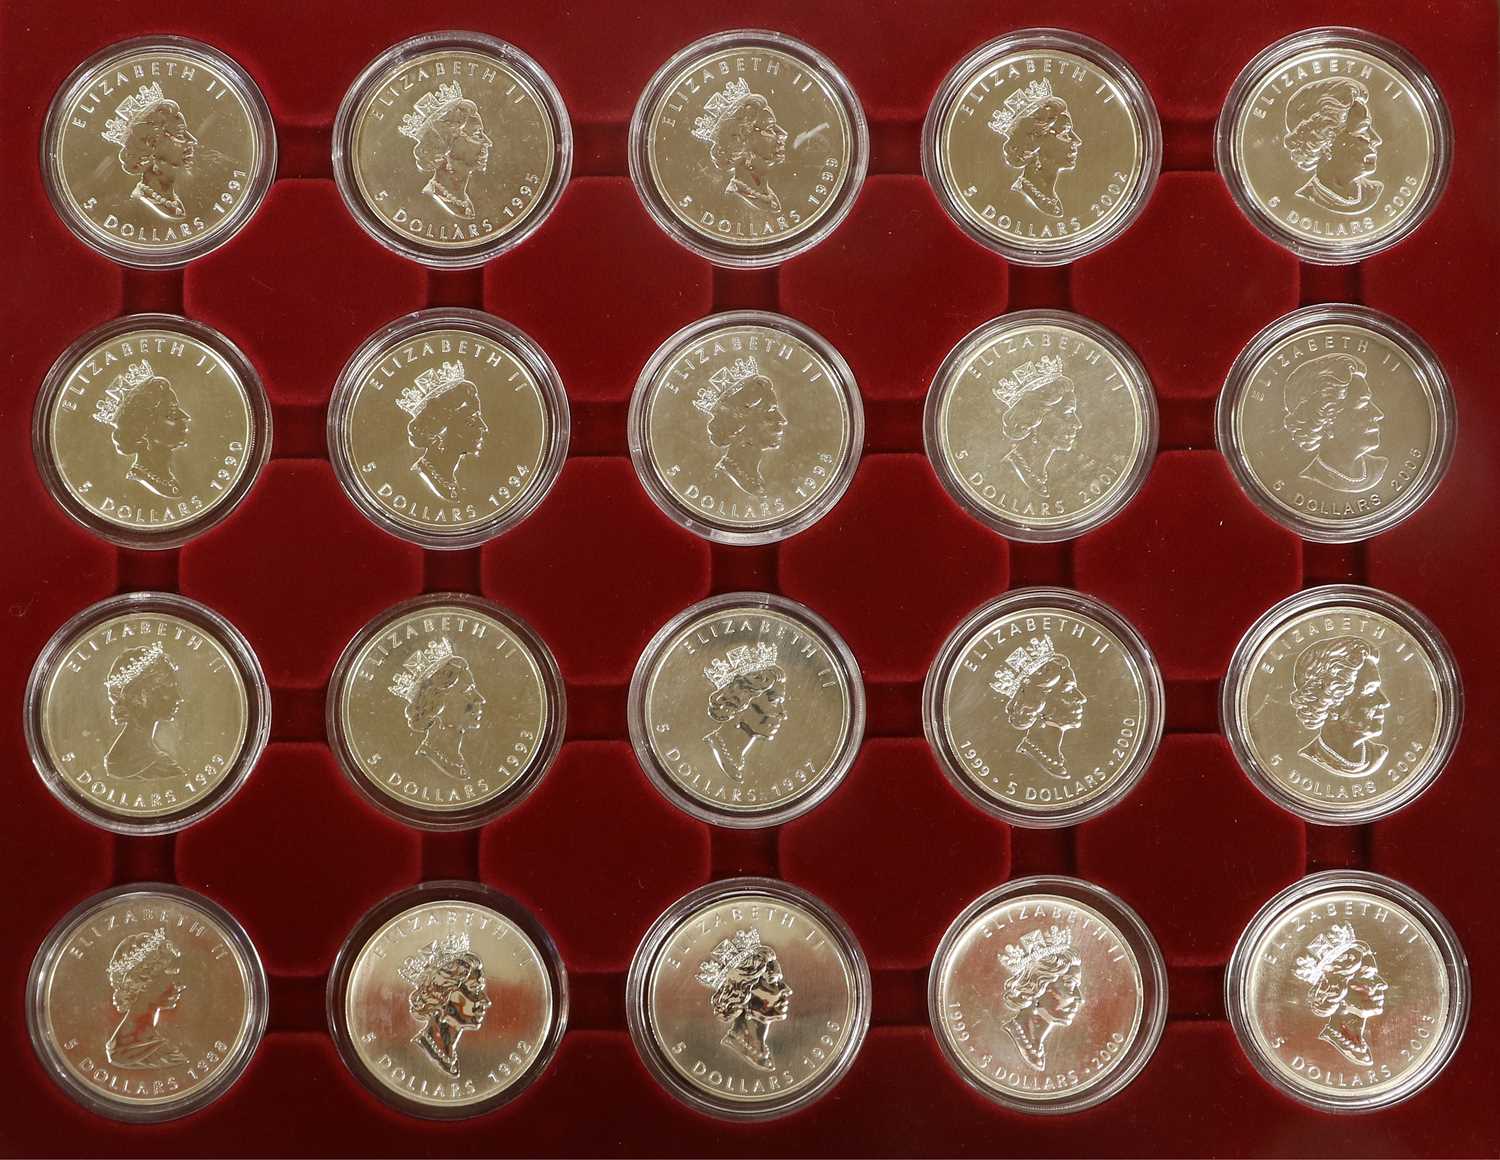 20x Canada 1oz Fine Silver Maple Leaf Coins, full date run 1988-2006, 5 dollar face value, all coins